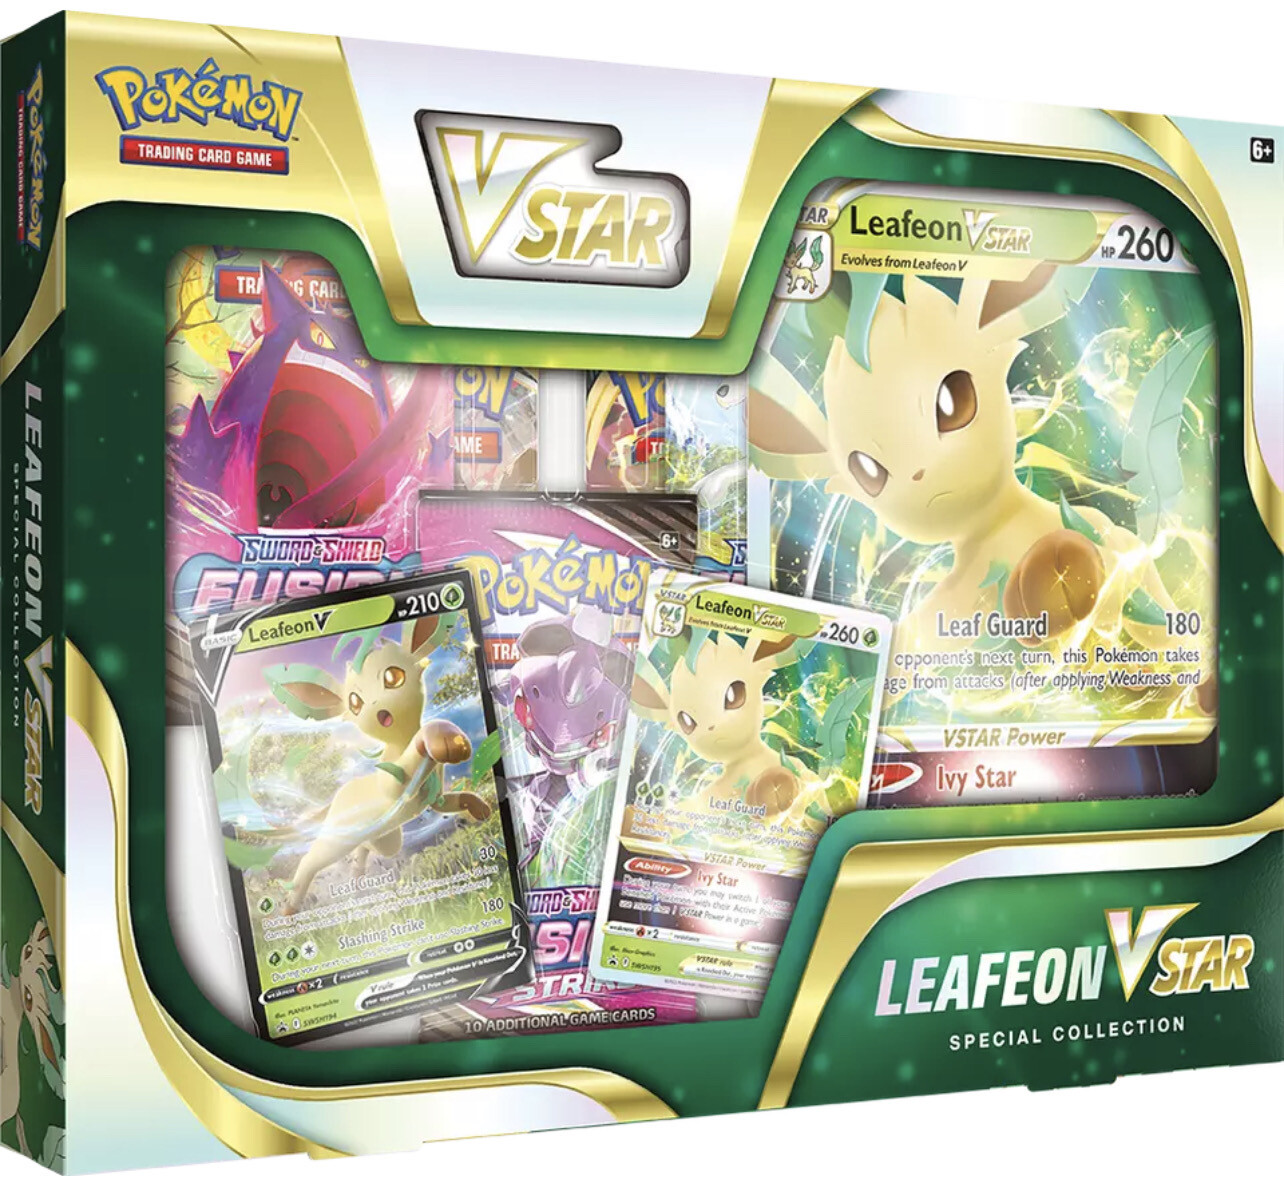 Pokemon Leafeon V Star Special Collection Box